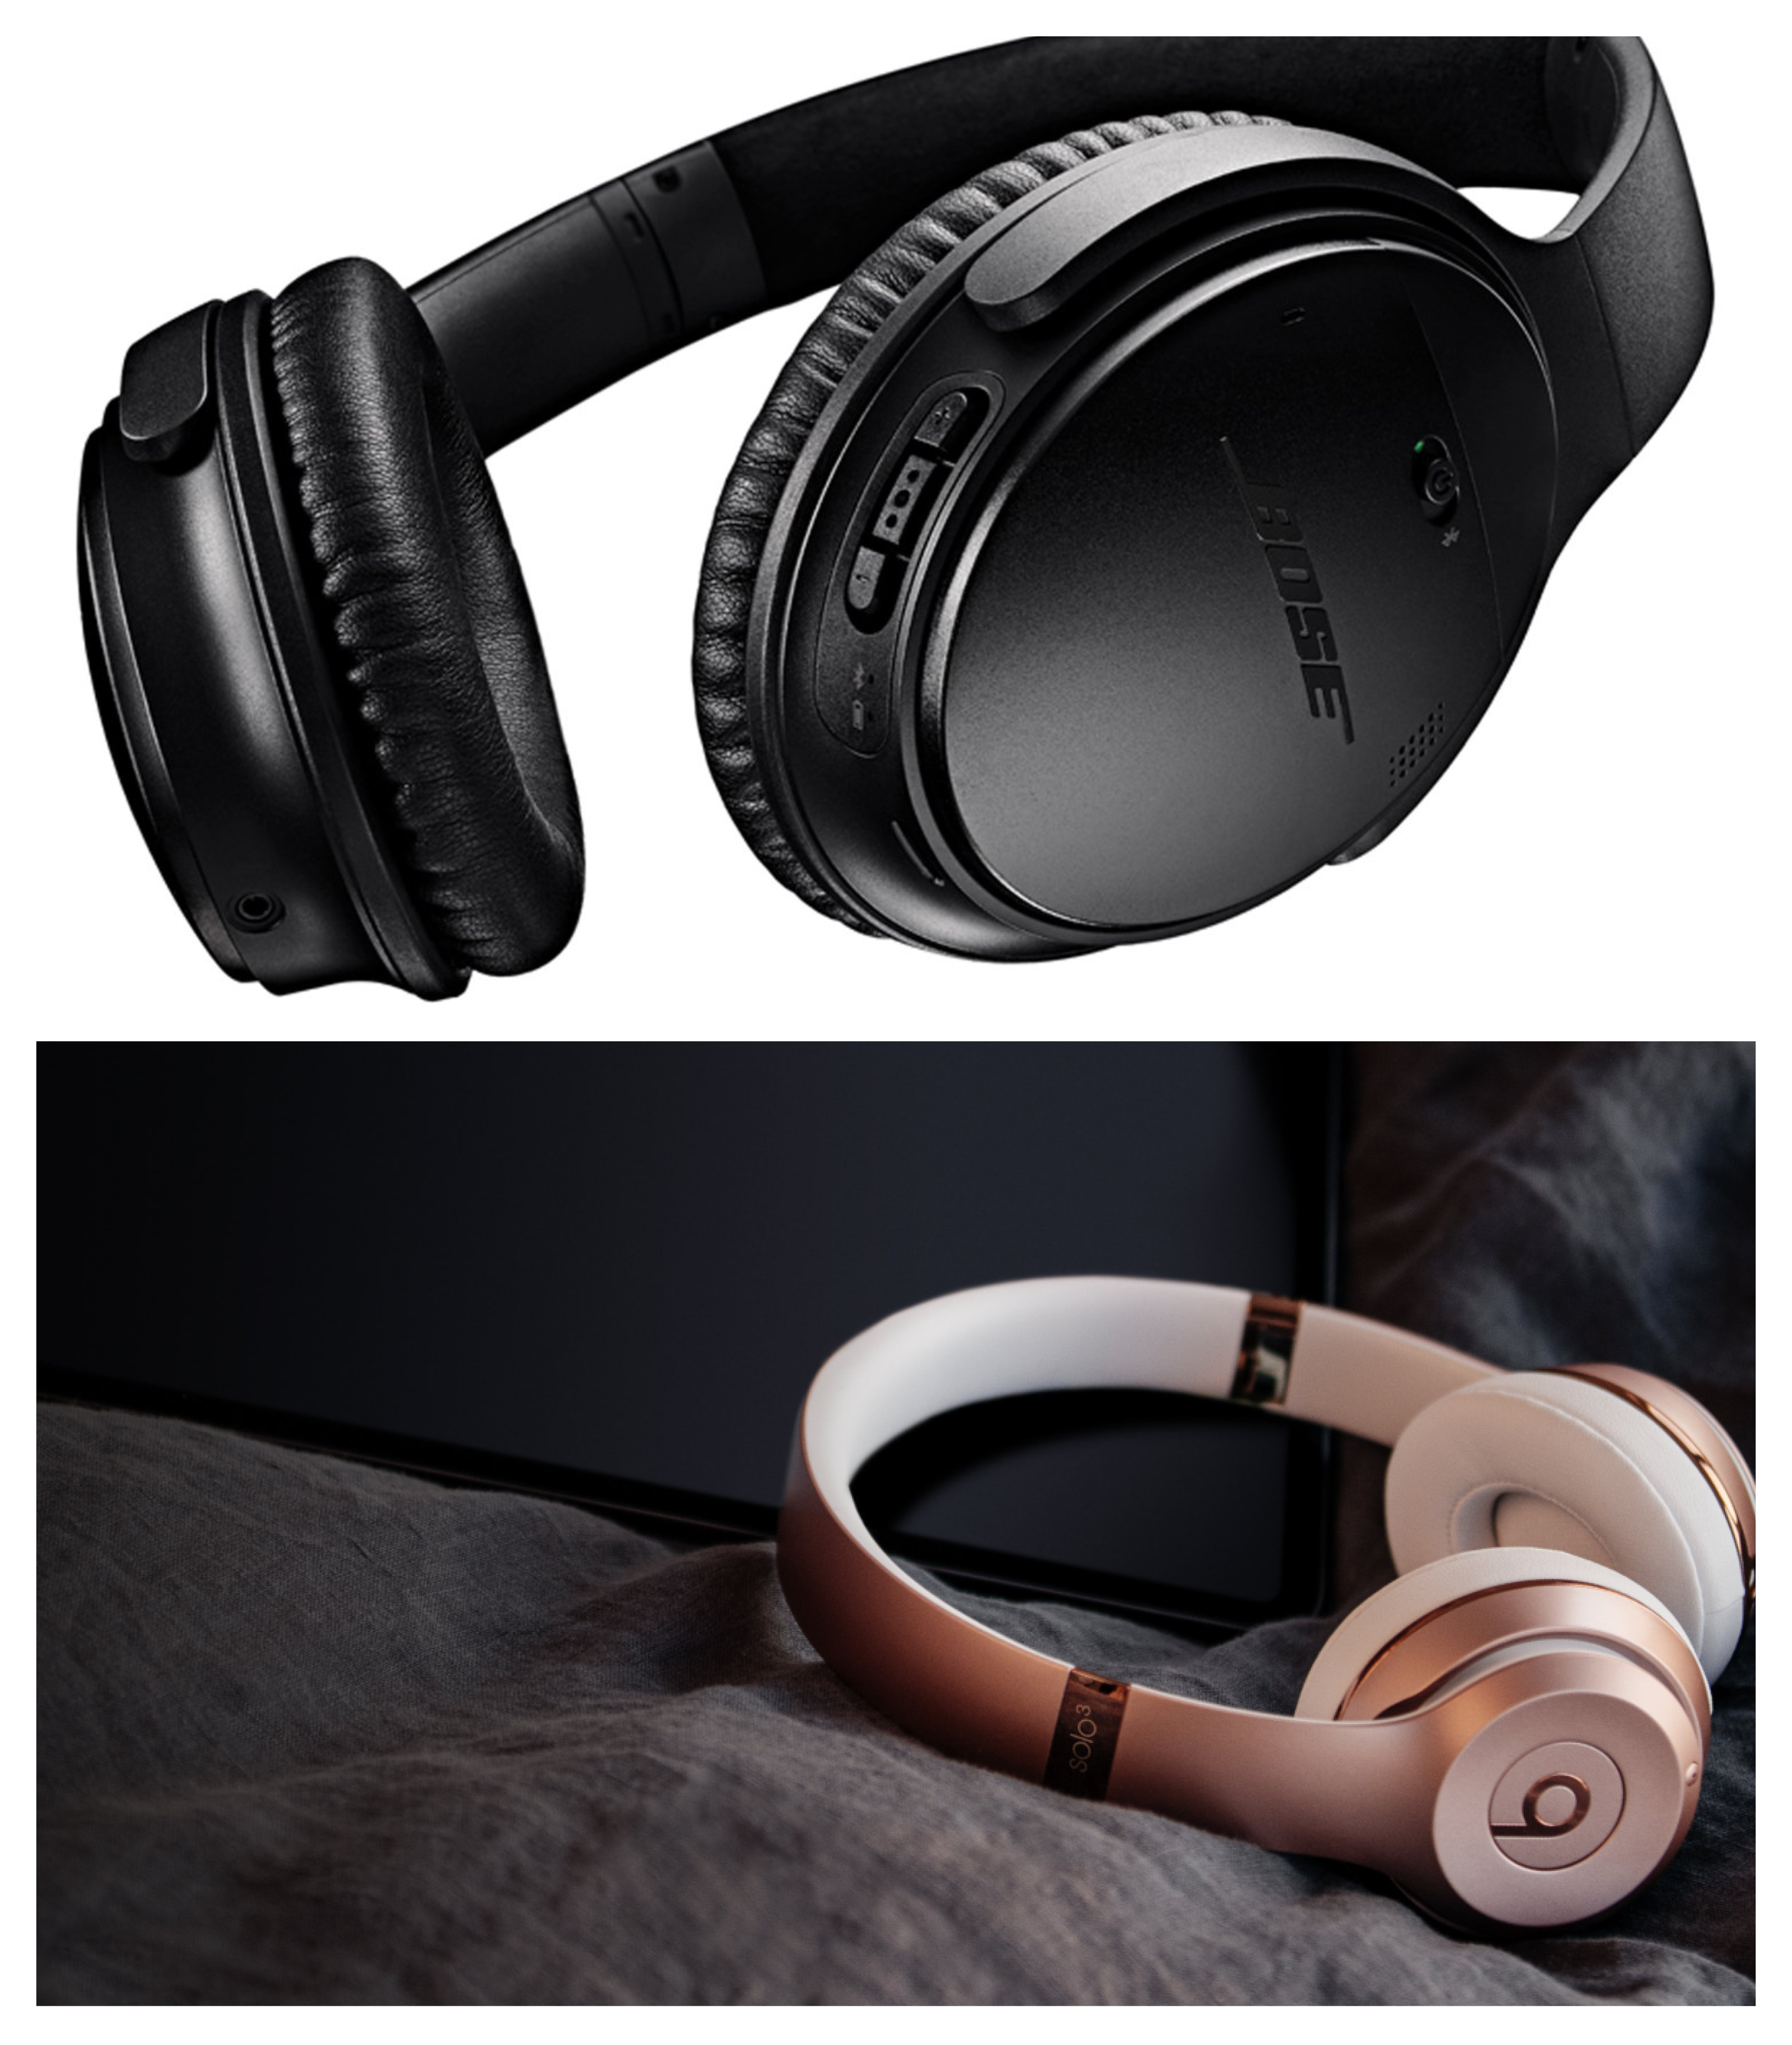 Bose Quietcomfort 35 Vs Beats Solo 3 - The Ultimate Headphone Face-off